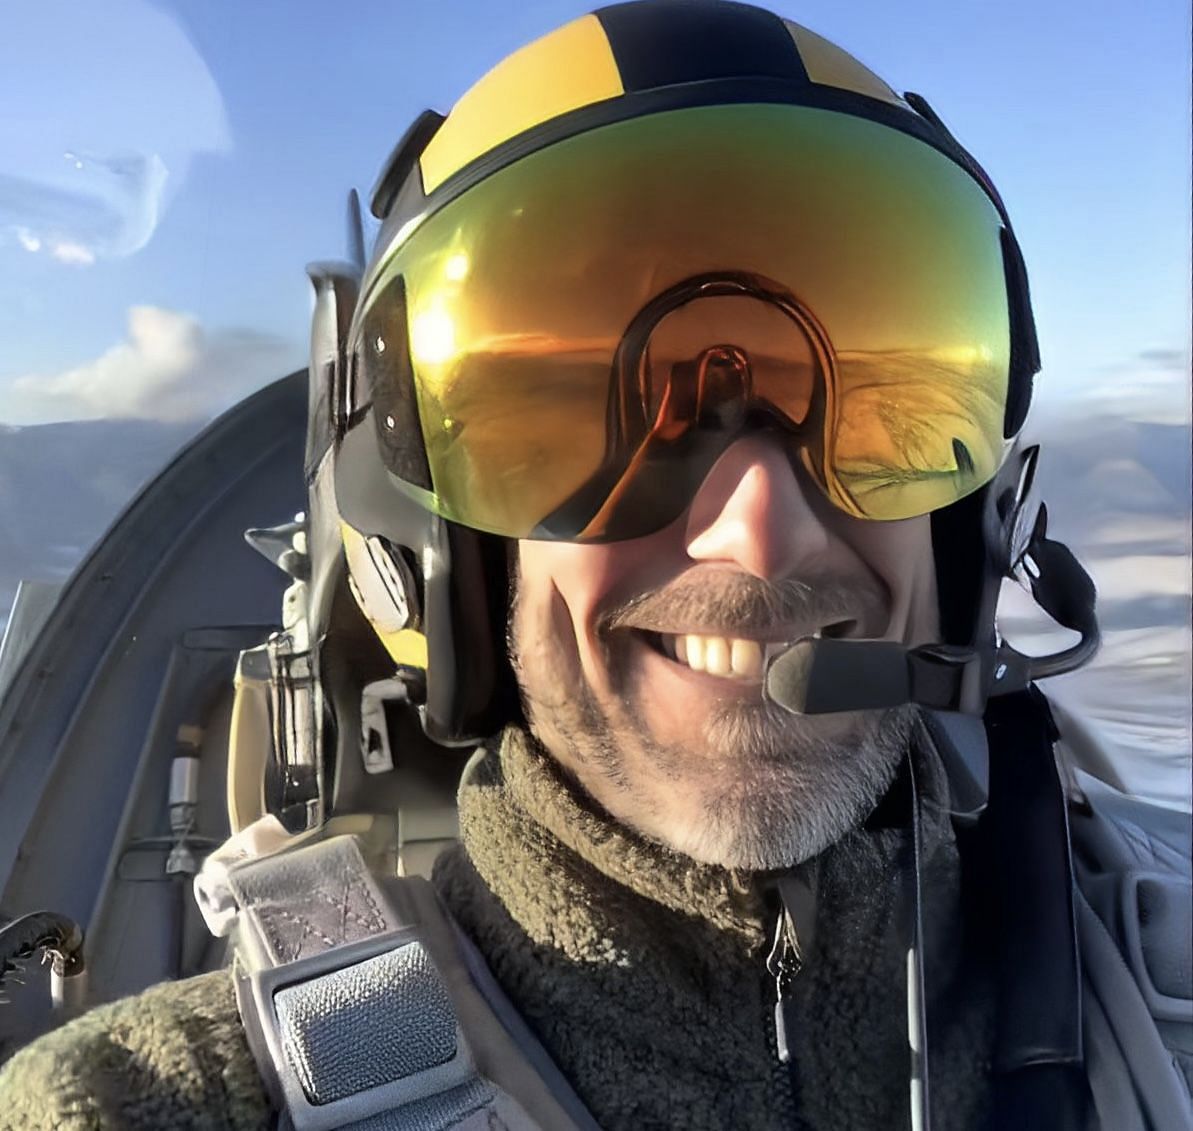 Henrik Lundqvist endures 6Gs in Top Gun-like fighter plane experience (Image Credit: hlundqvist/Instagram)